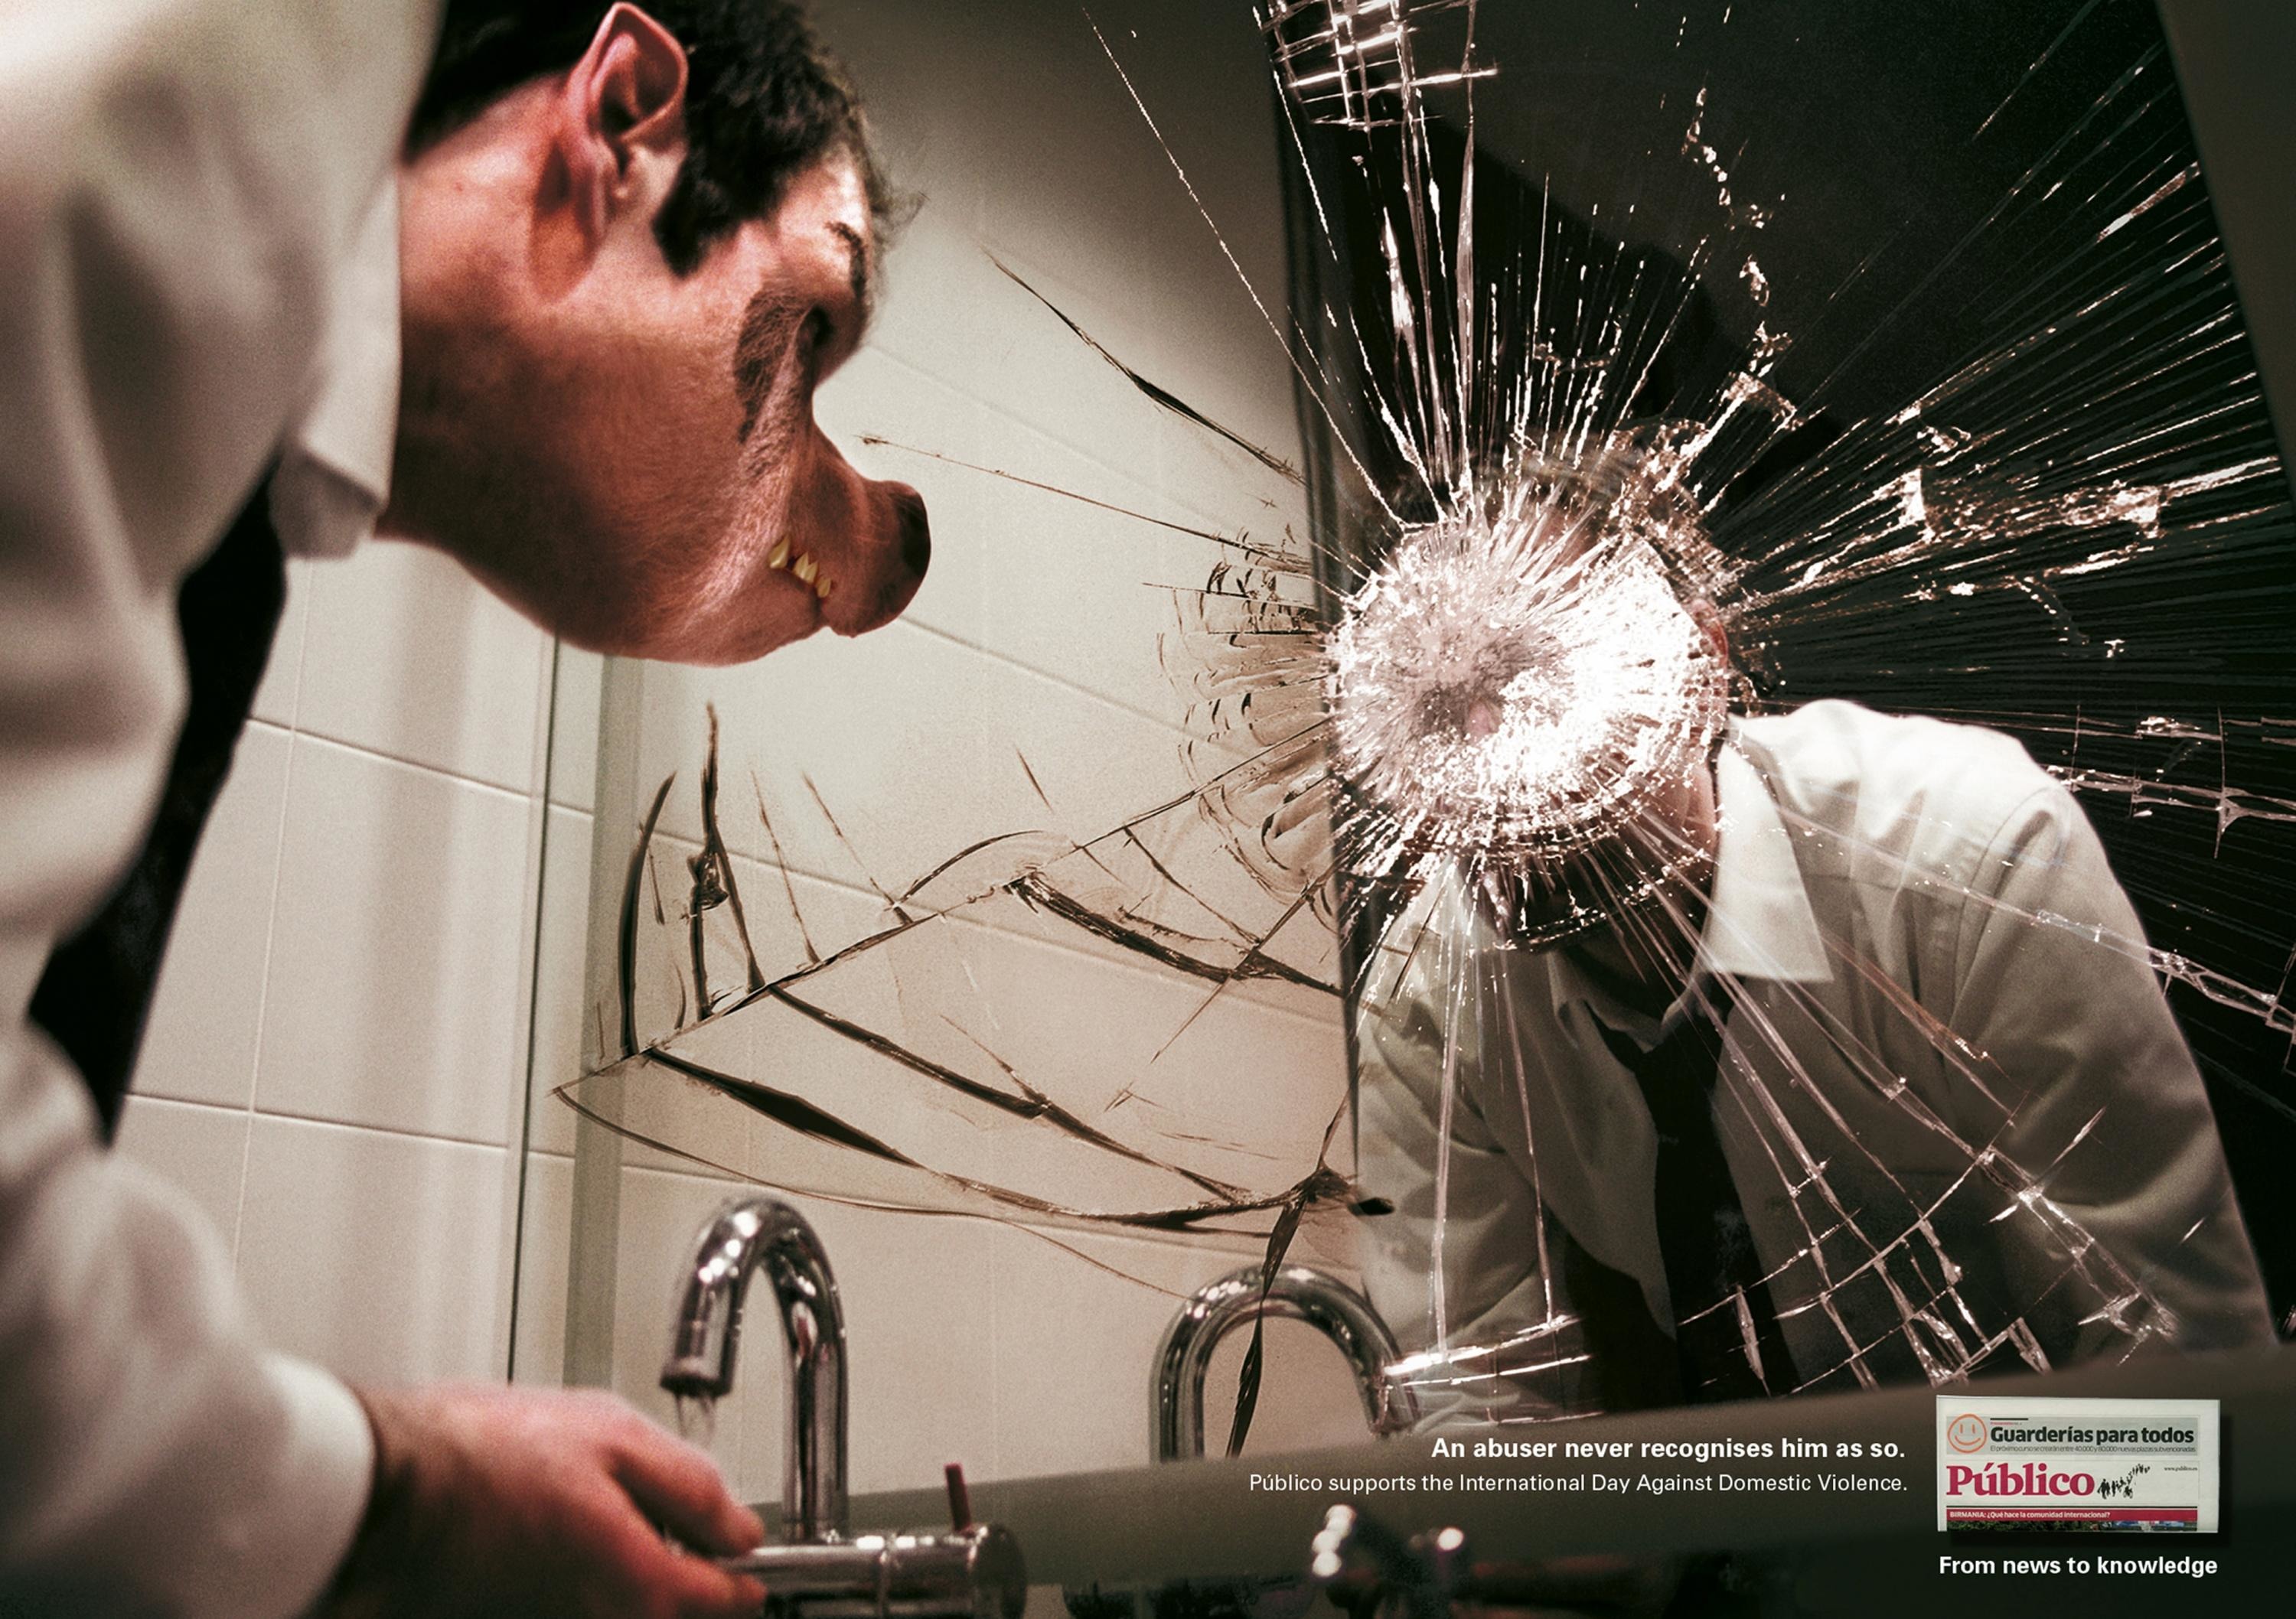 Разбить работу на. Разбитое зеркало кулаком. Человек в разбитом зеркале. Человек разбивает зеркало.